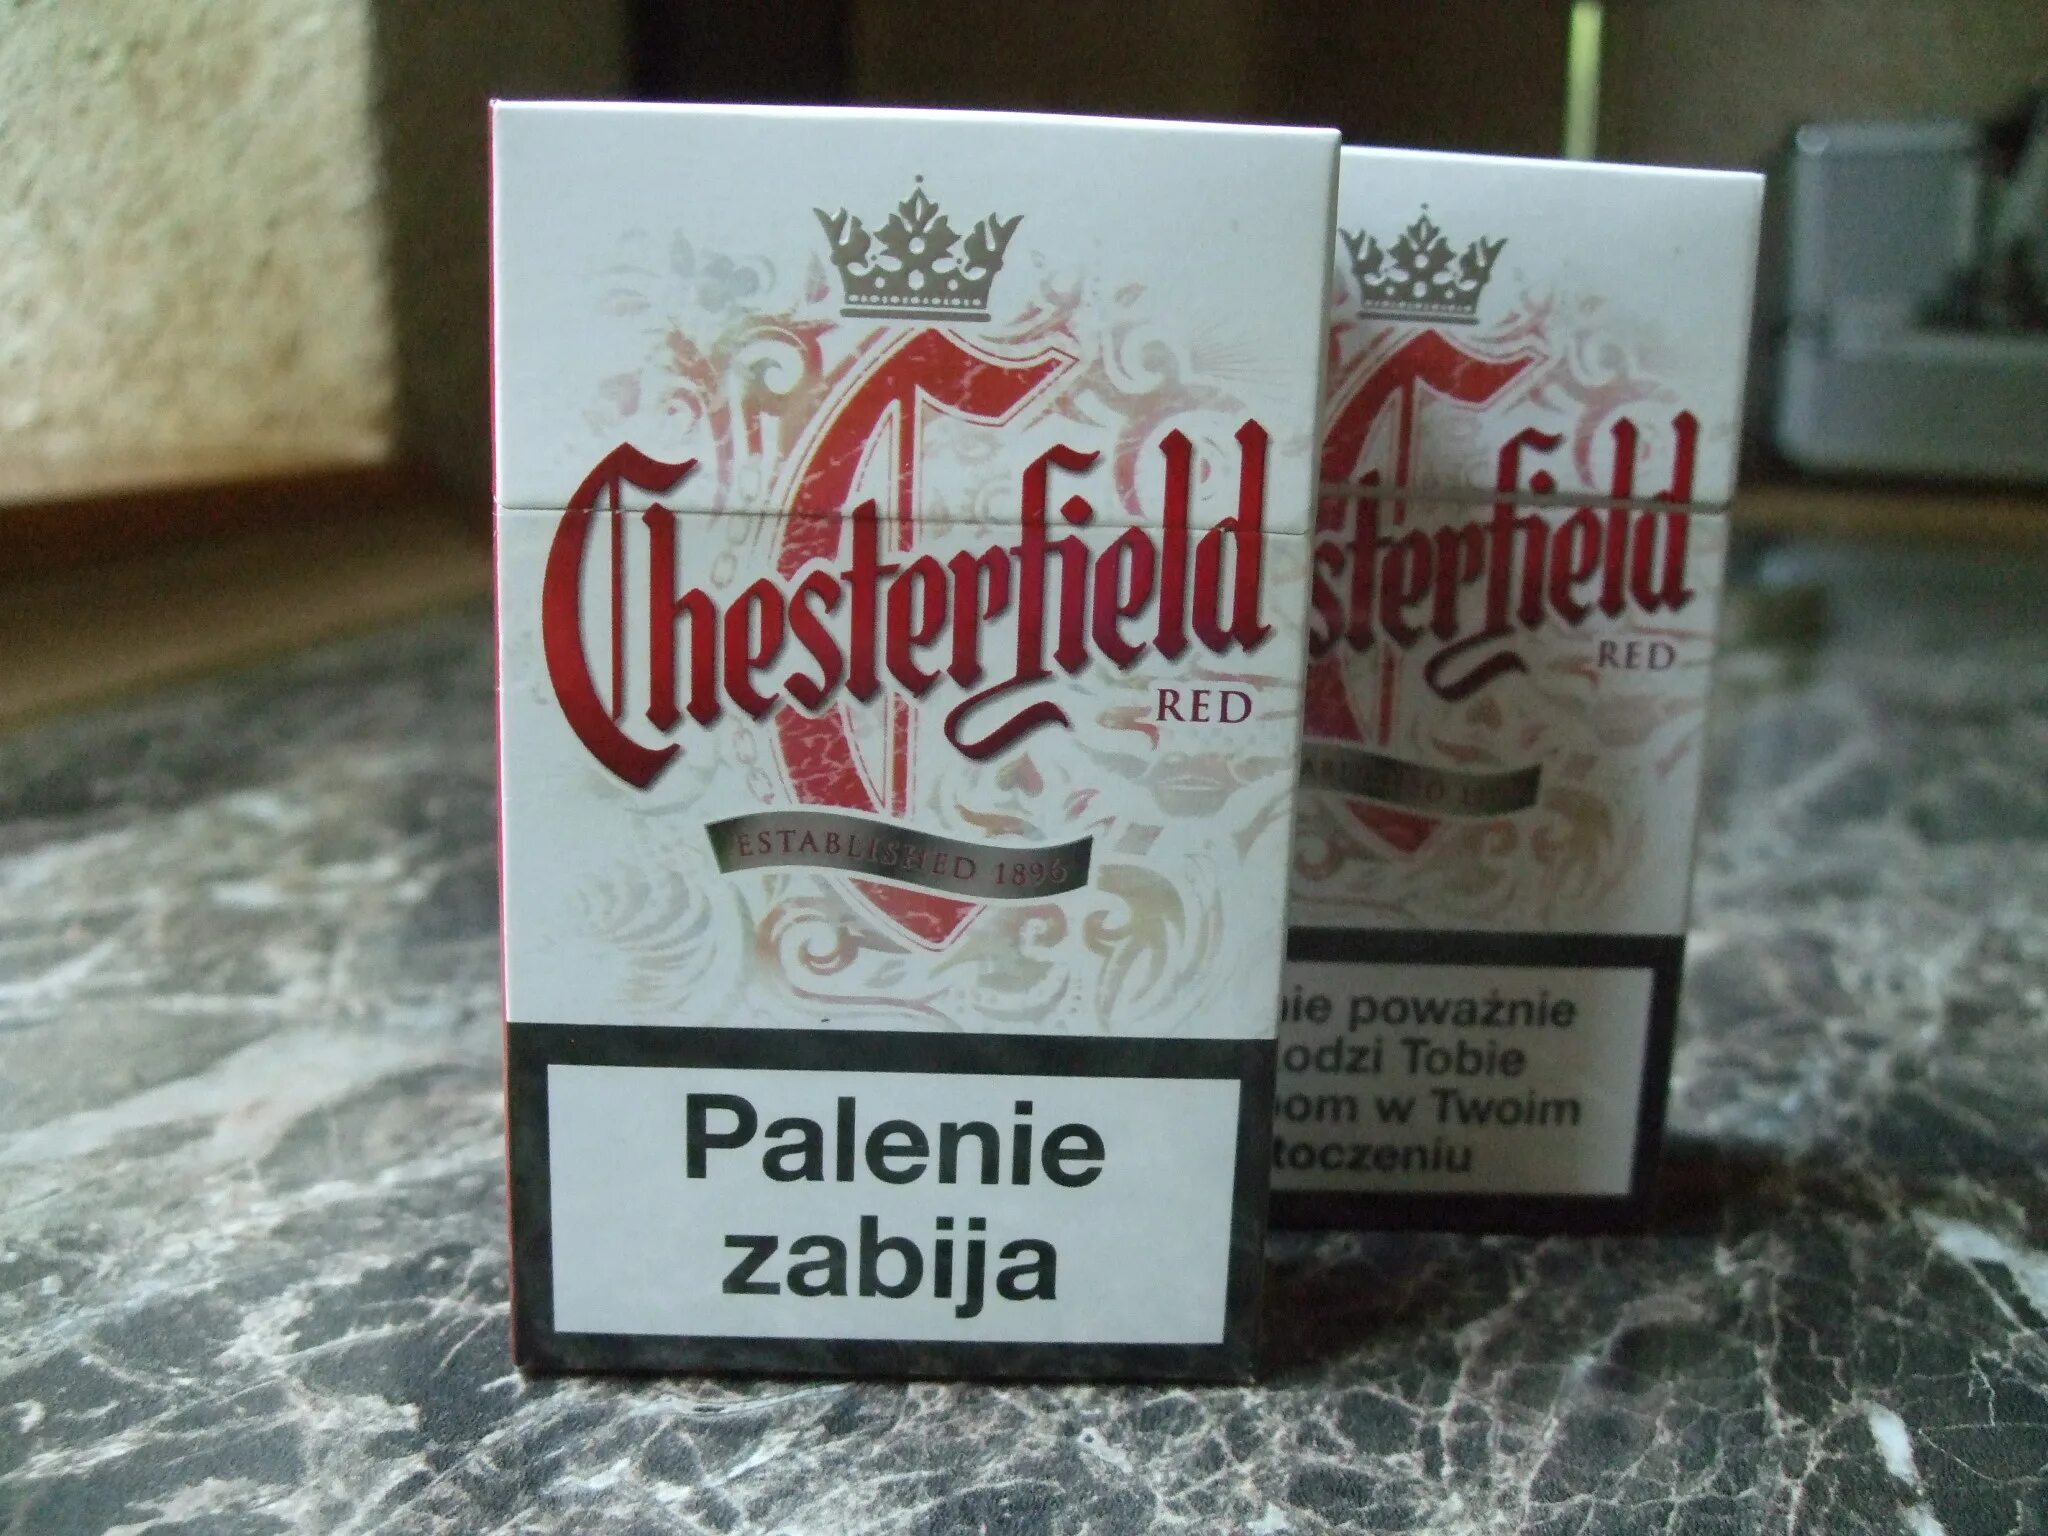 Честер компакт цена. Сигареты Честерфилд компакт. Сигареты Честер компакт красный. Сигареты Честер Честерфилд. Chesterfield Compact красный.